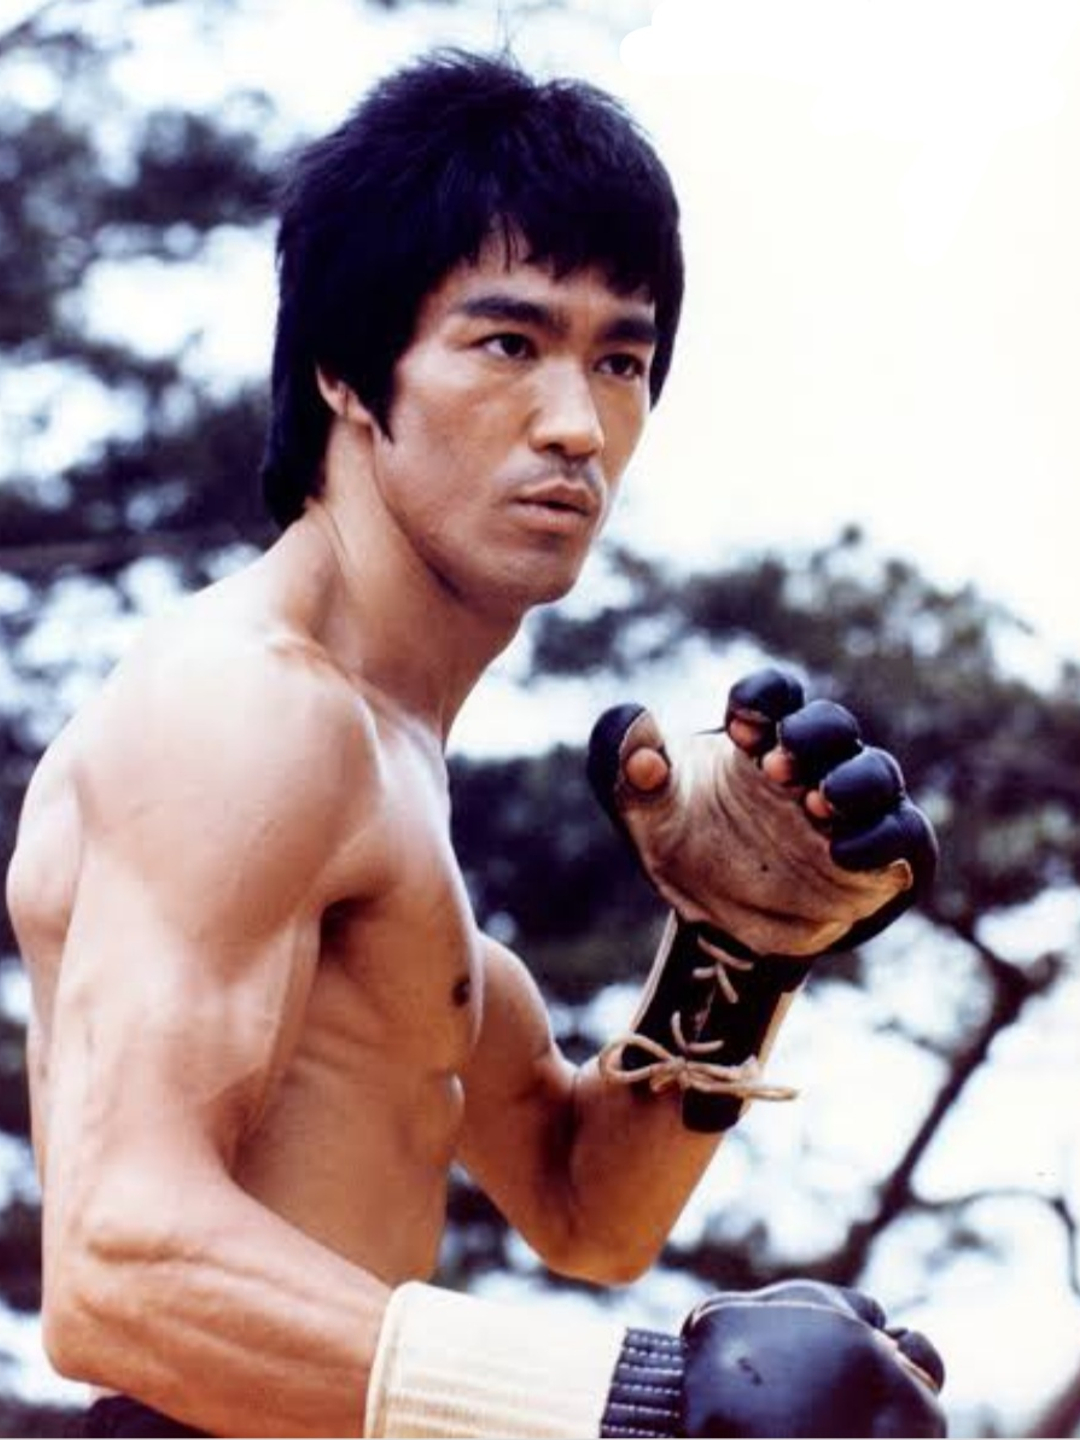 Bruce Lee personal traits